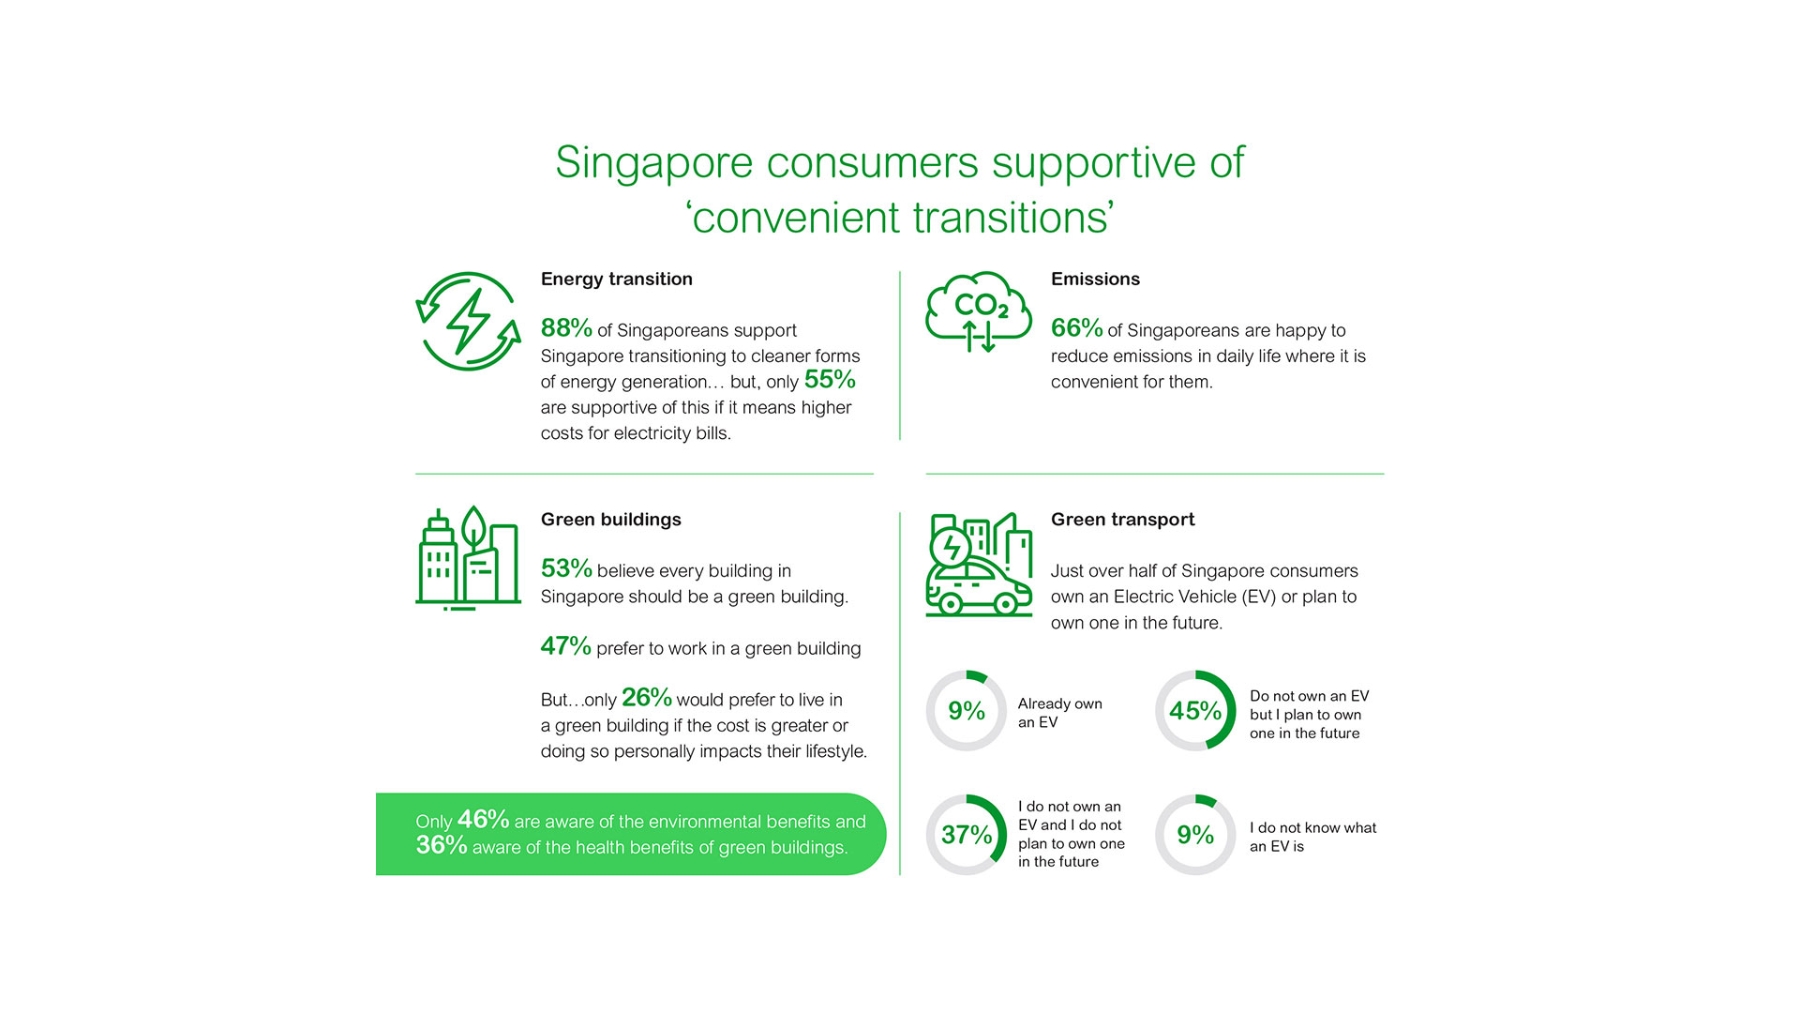 Singapore Green Plan 2030 Schneider Electric Singapore